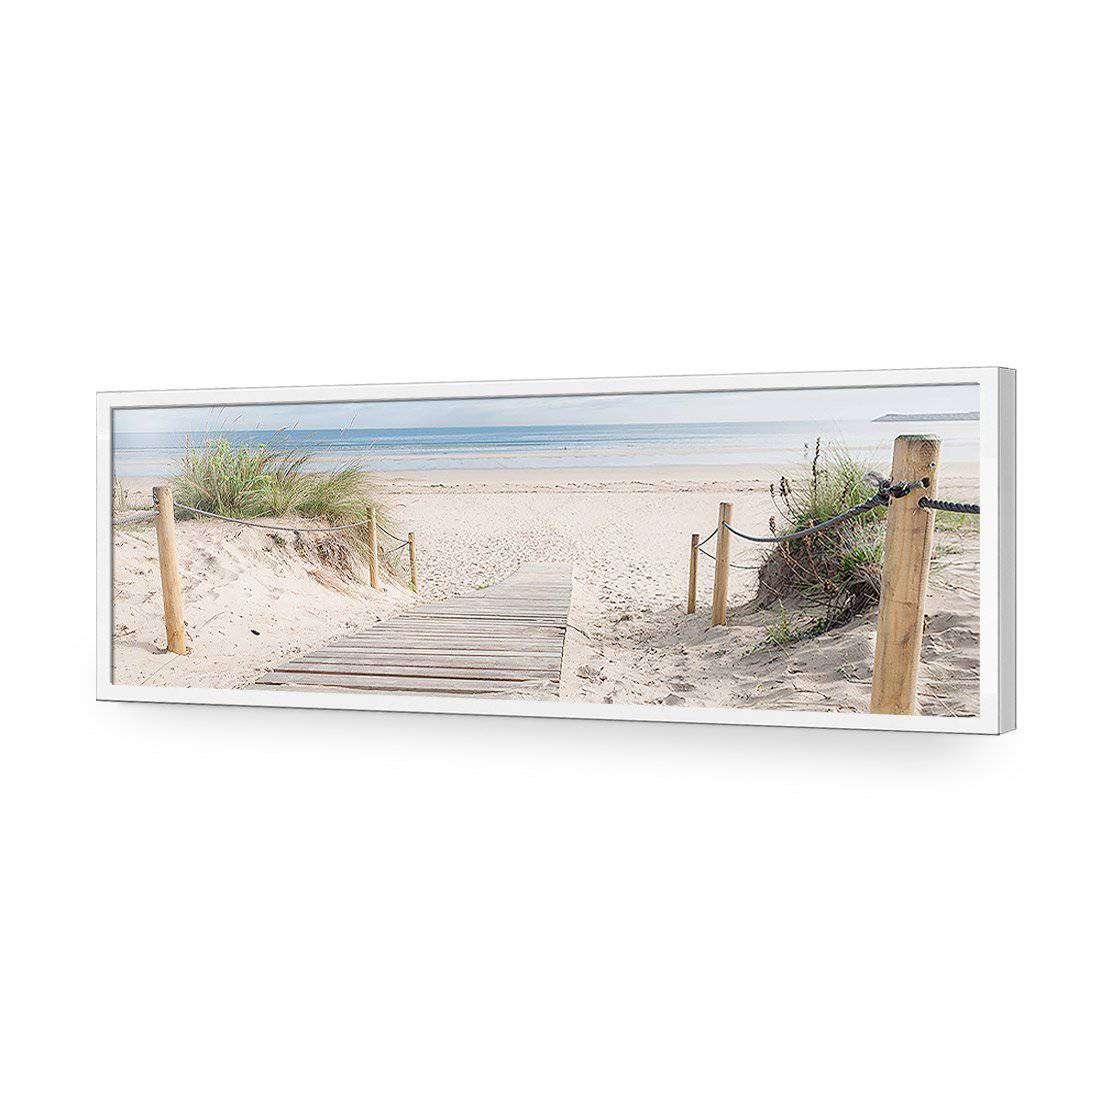 Beach Path, Long-Acrylic-Wall Art Design-Without Border-Acrylic - White Frame-60x20cm-Wall Art Designs